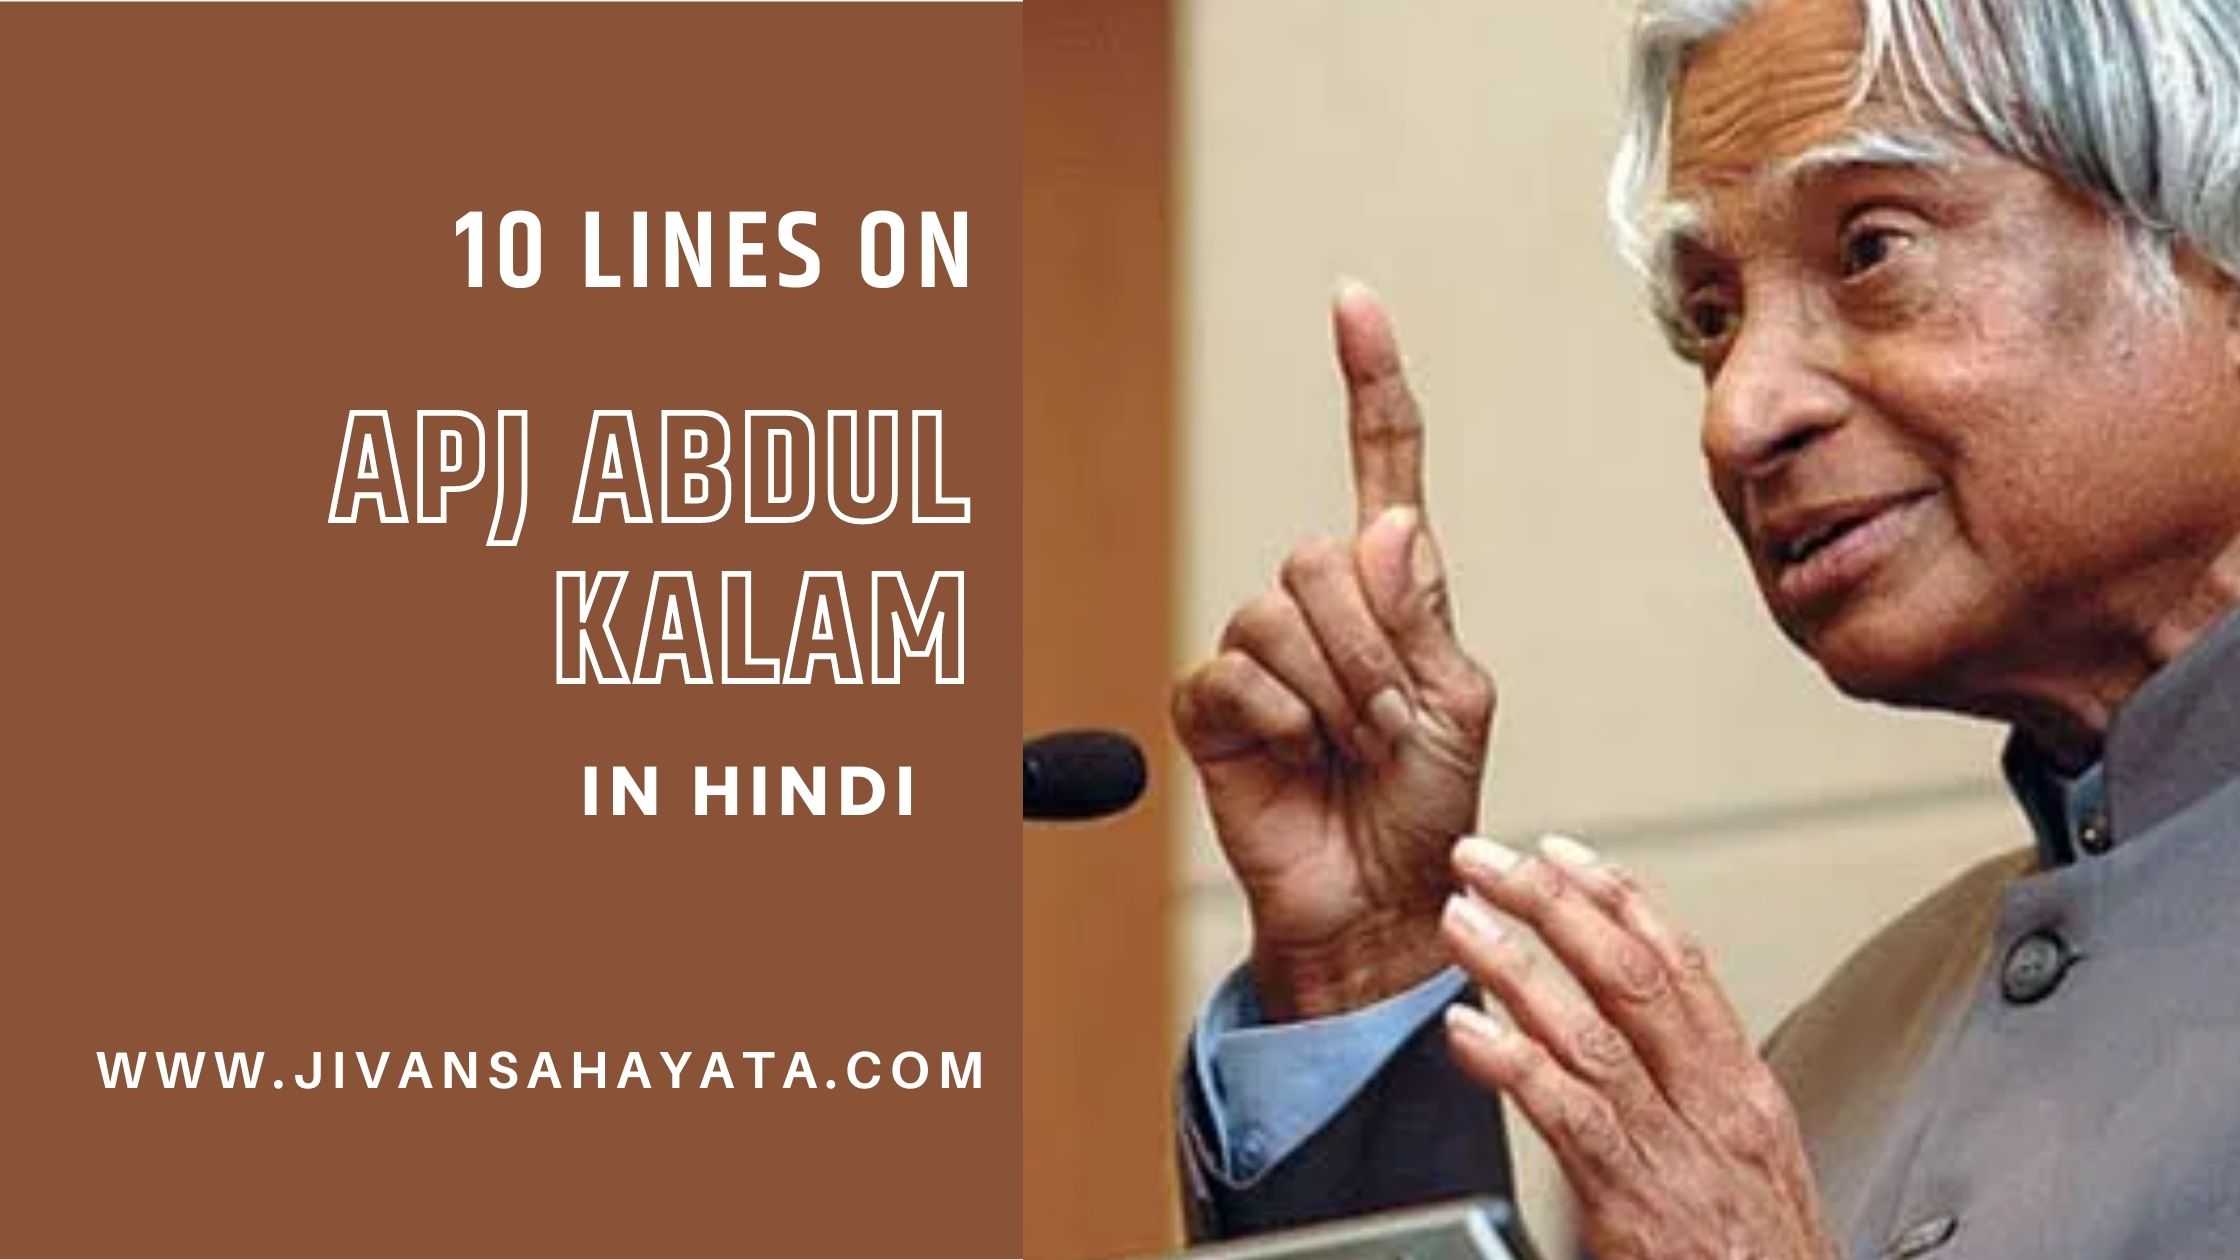 ए.पी.जे.अब्दुल कलाम पर 10 लाइन - 10 Lines on APJ Abdul Kalam in Hindi